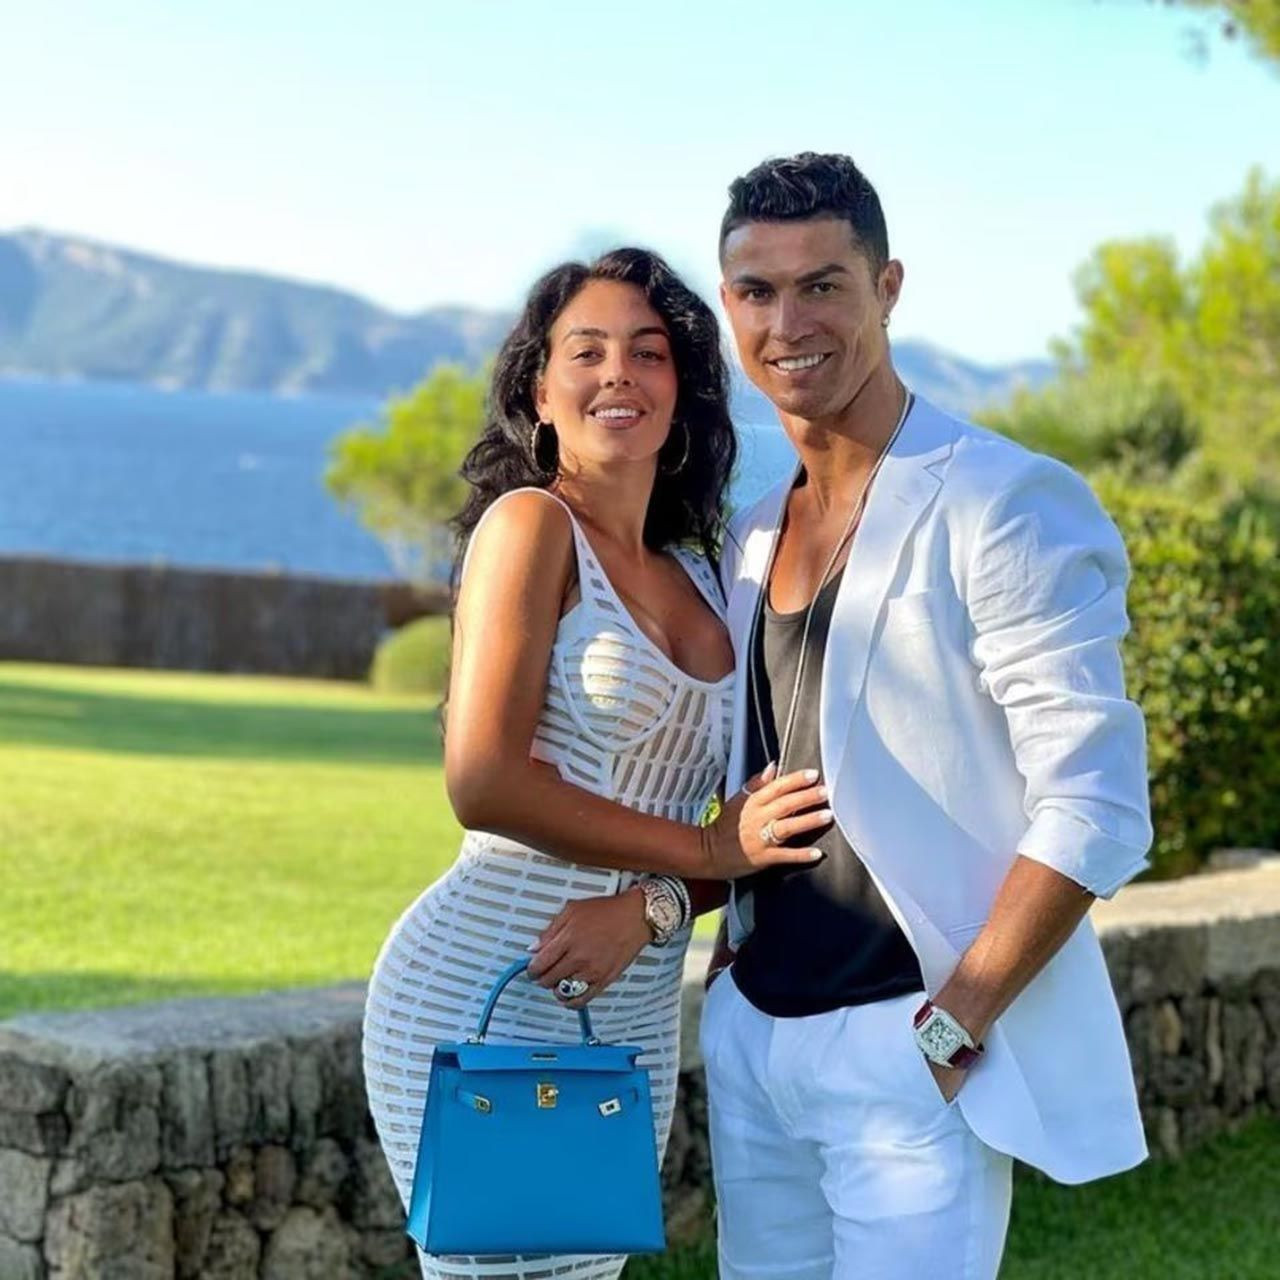 Cristiano Ronaldo'nun sevgilisinden olay fantezi itirafı - Resim: 1